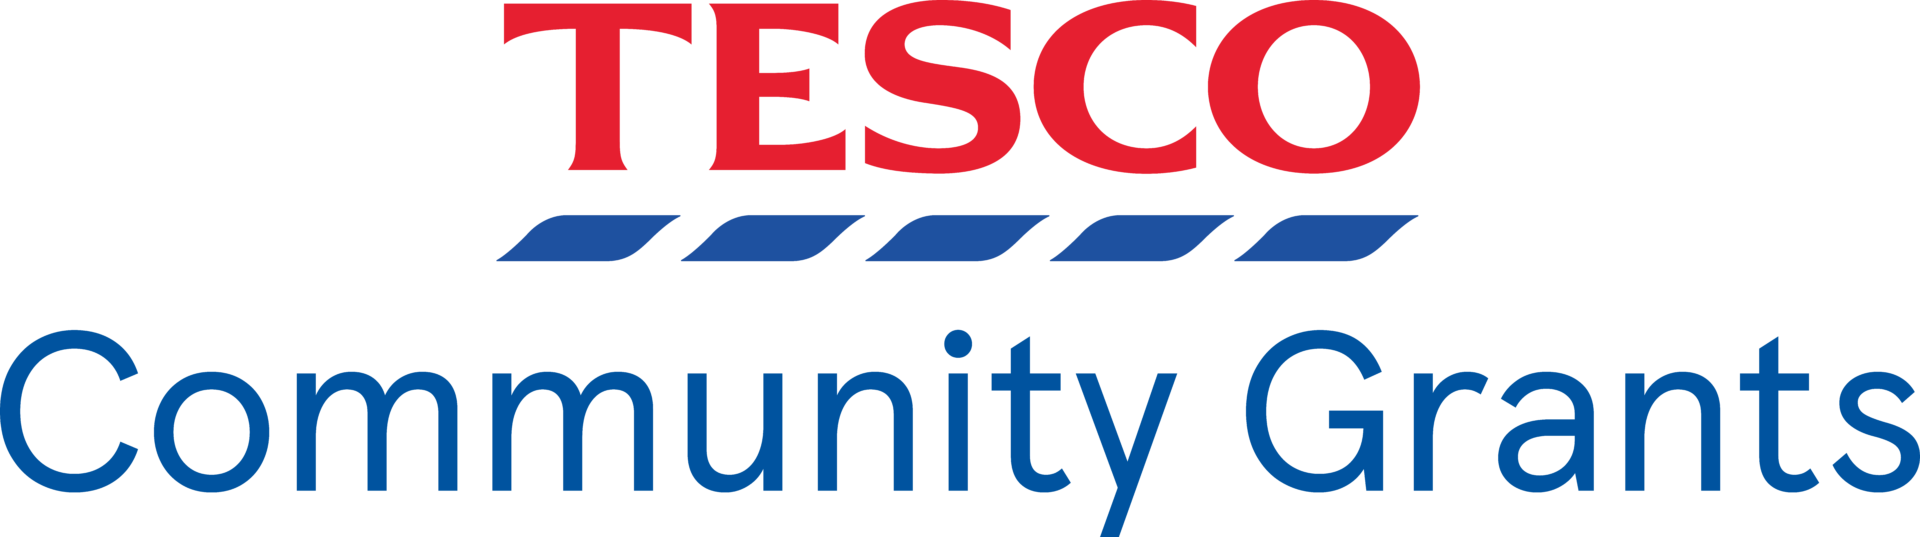 TESCO_CommunityGrants_Logo.png